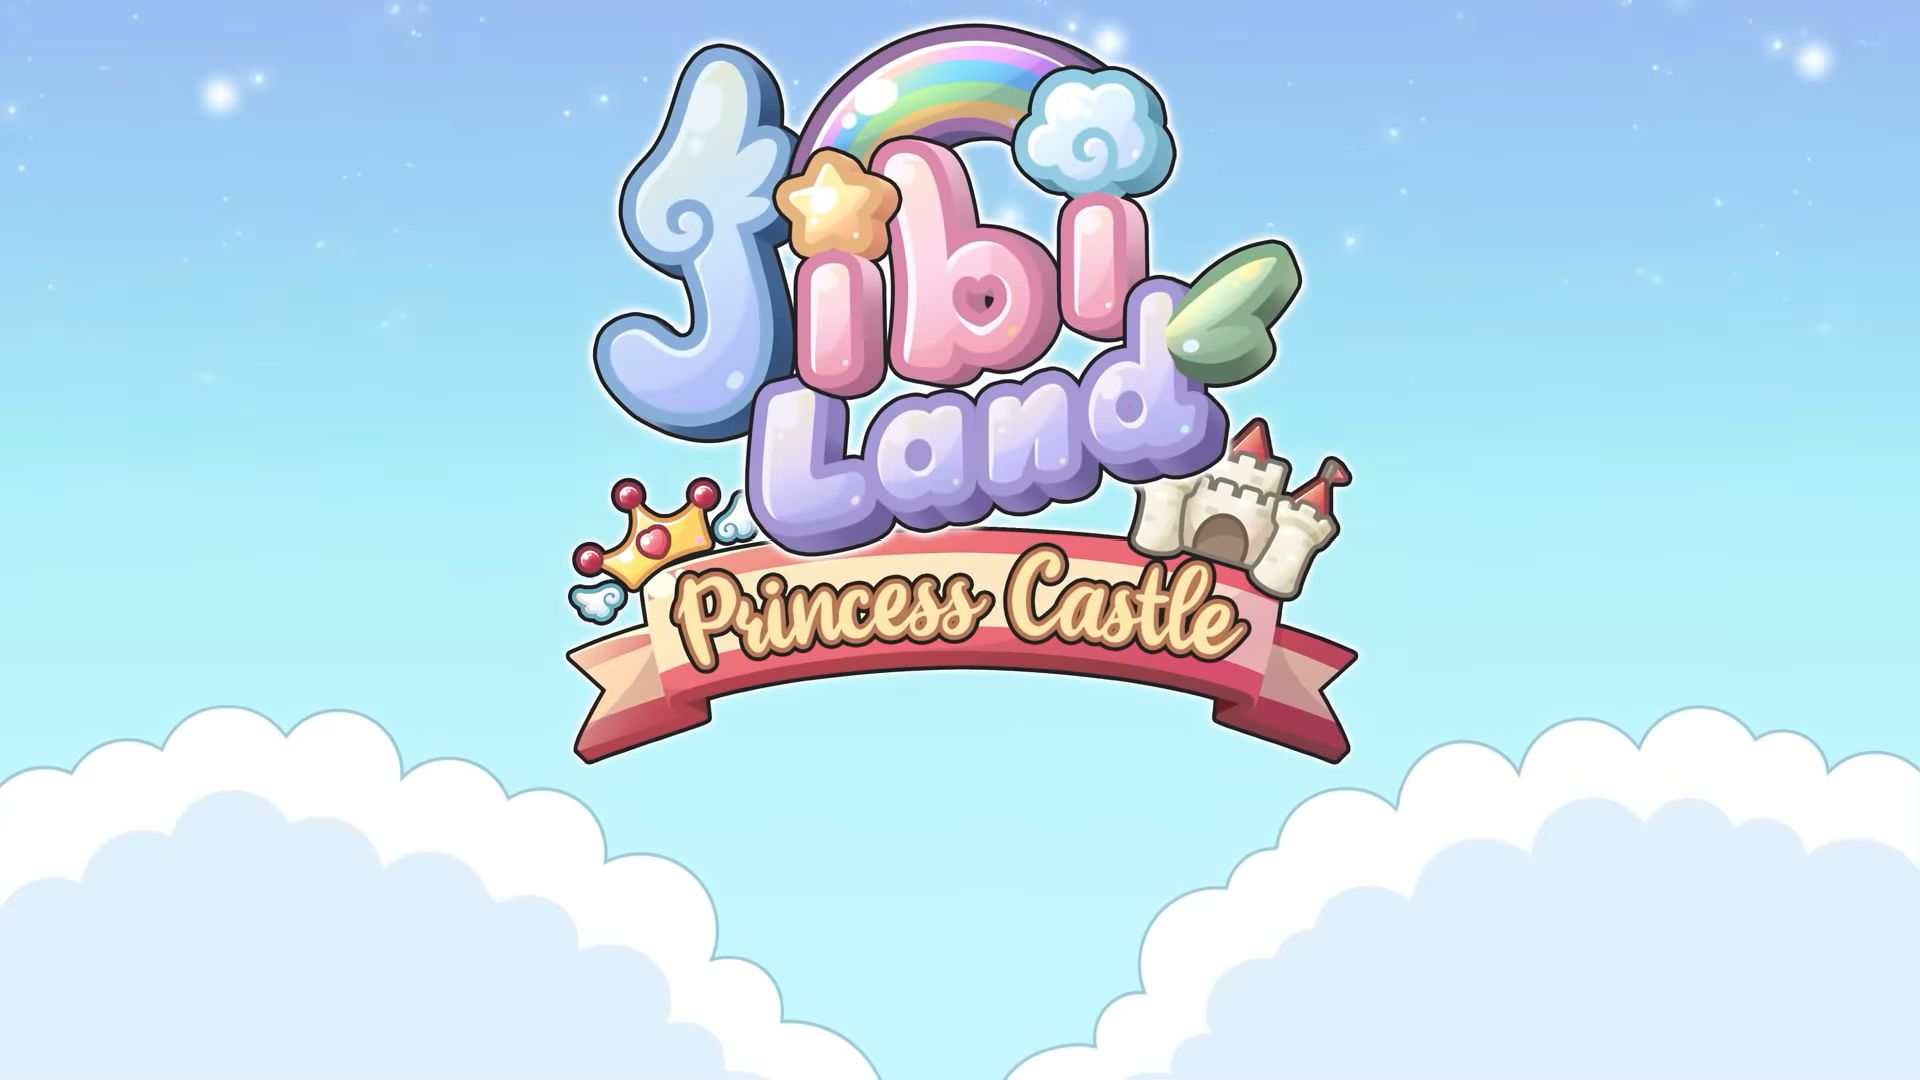 Jibi Land : Princess Castle スクリーンショット1